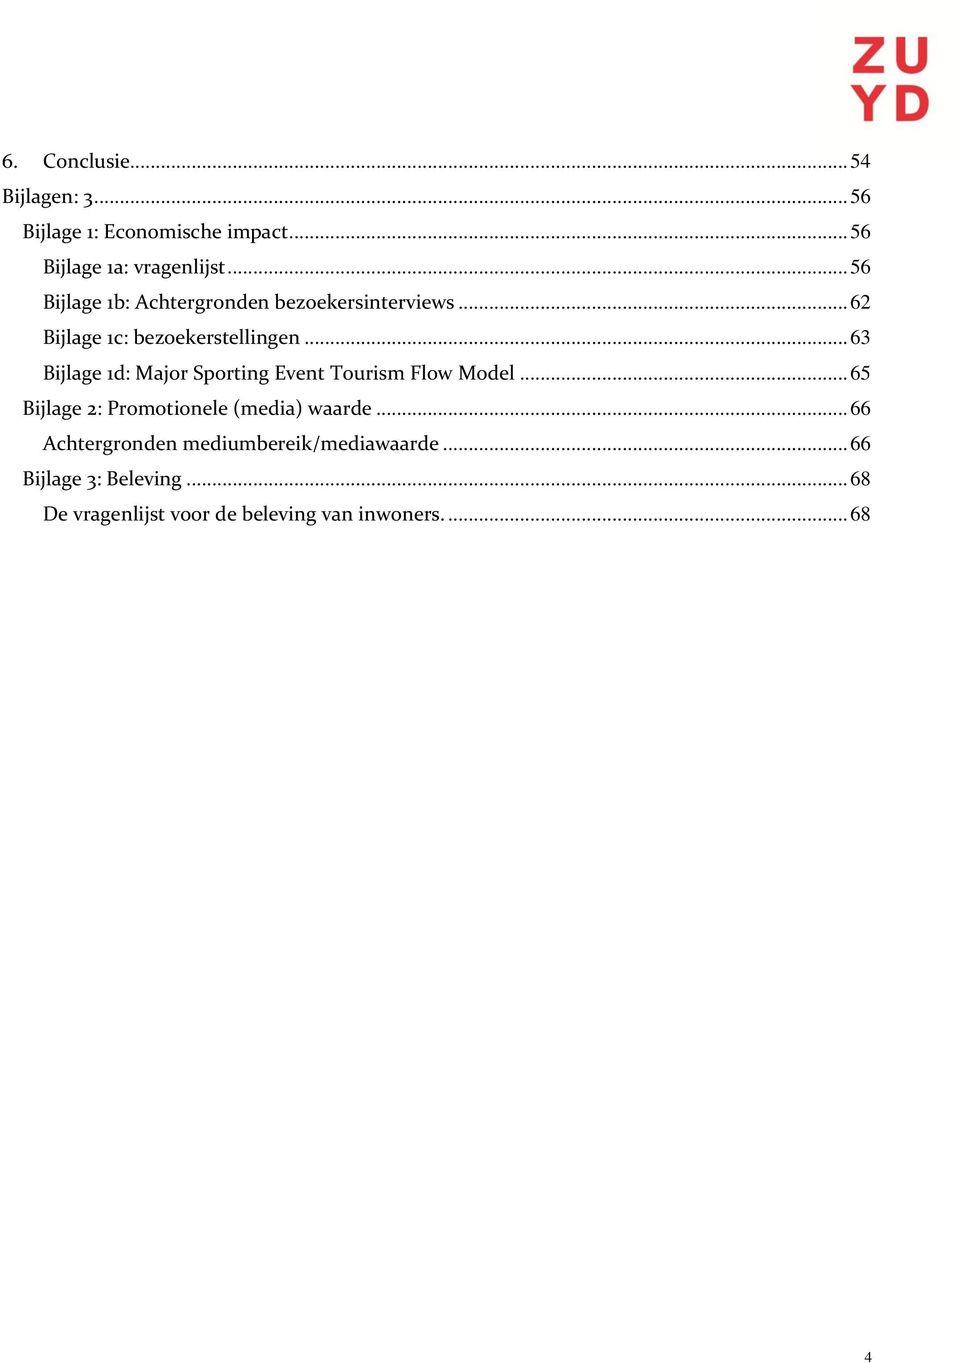 .. 63 Bijlage 1d: Major Sporting Event Tourism Flow Model... 65 Bijlage 2: Promotionele (media) waarde.